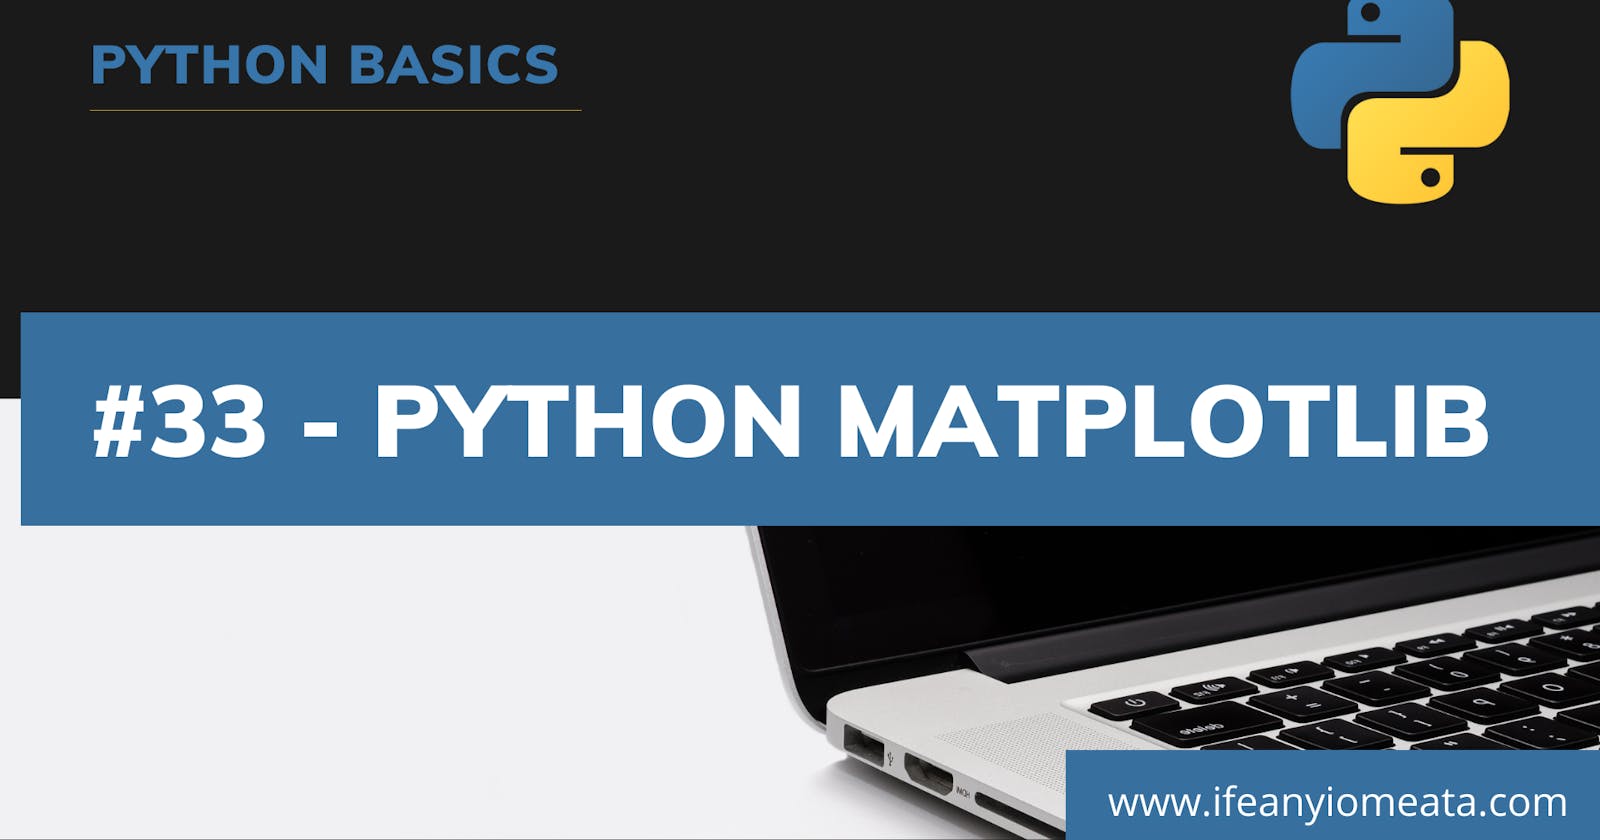 #33 - Python MATPLOTLIB